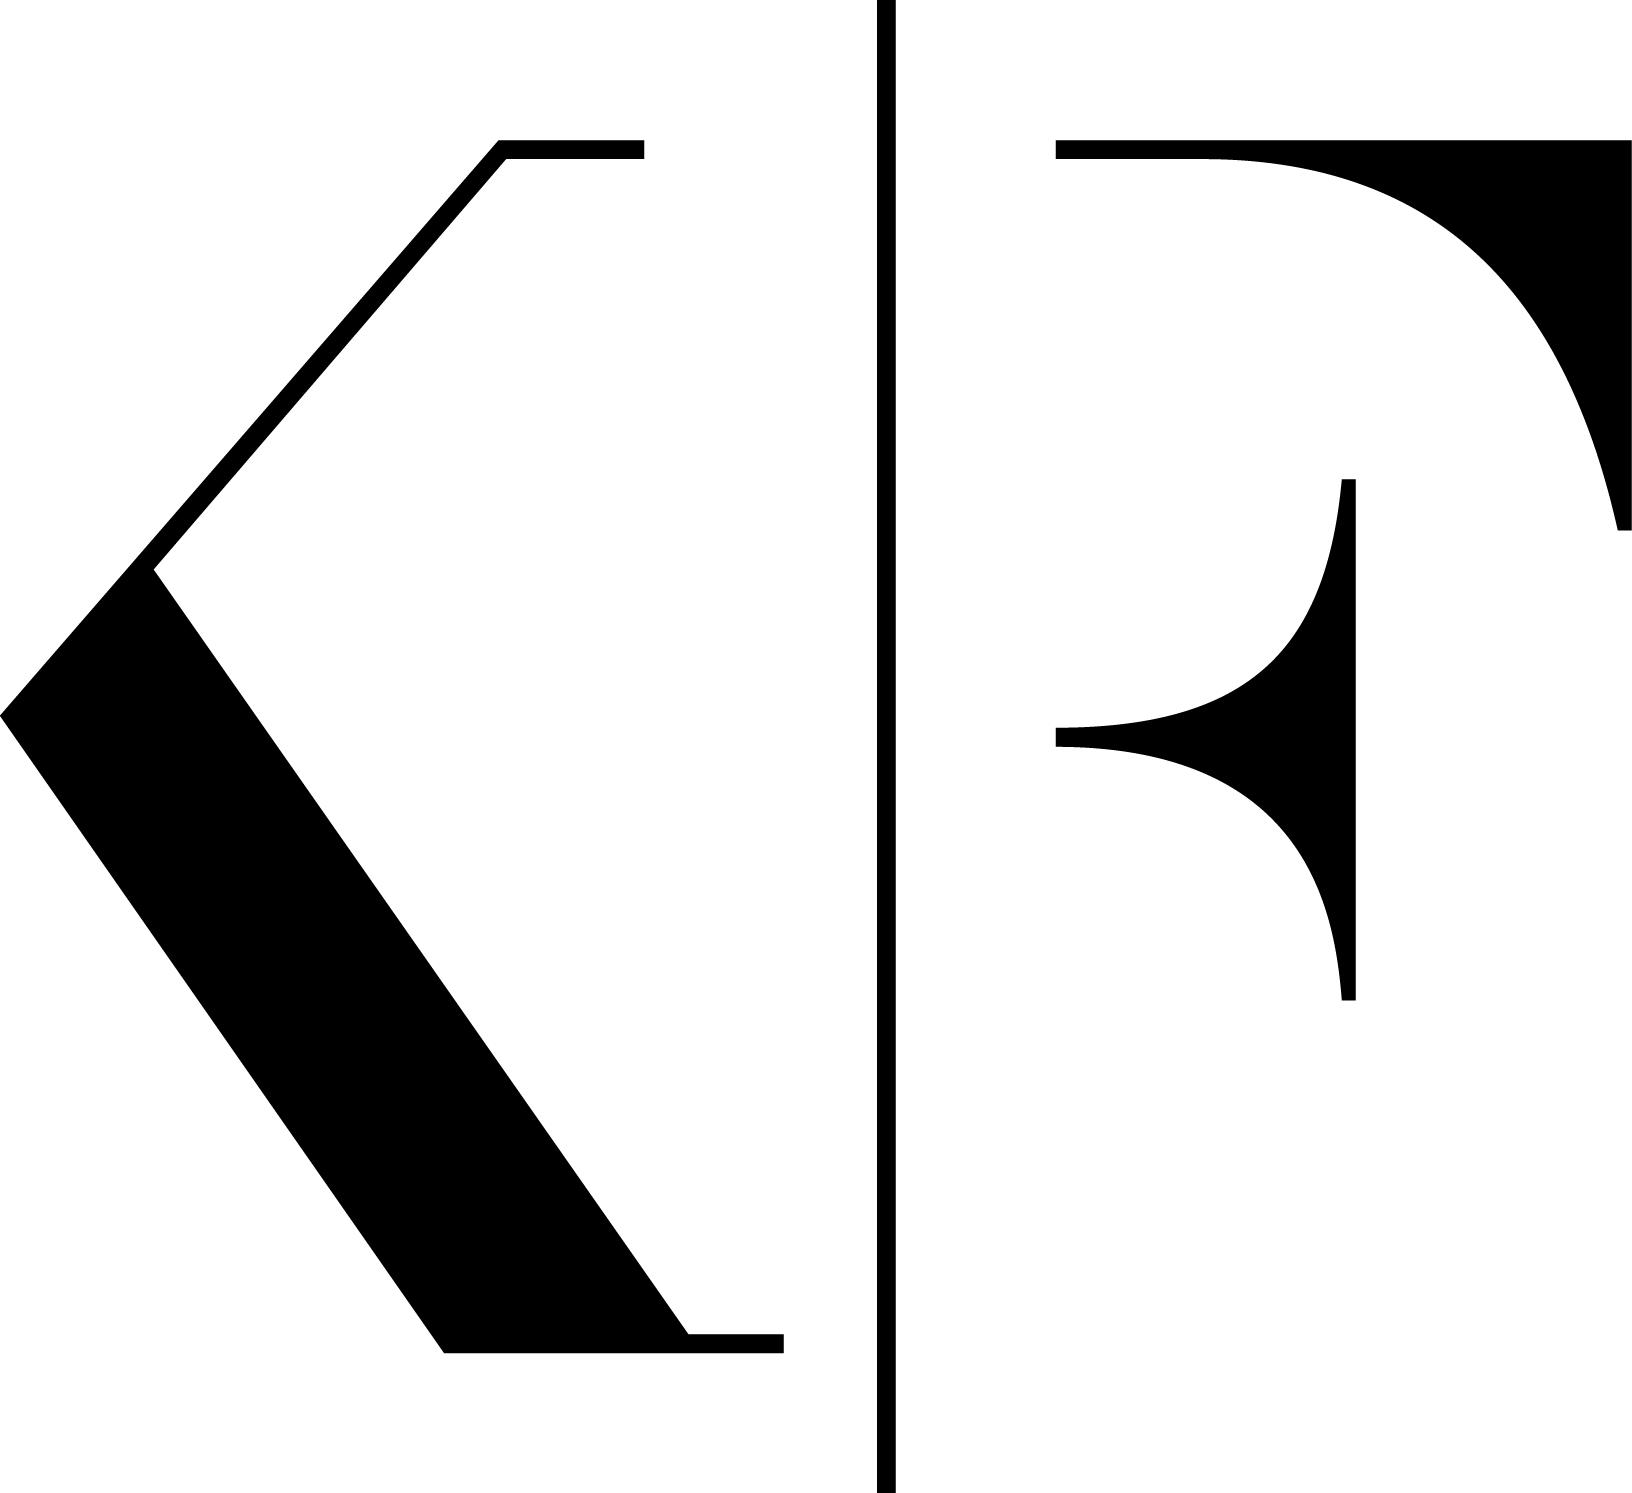 Korn ferry logo